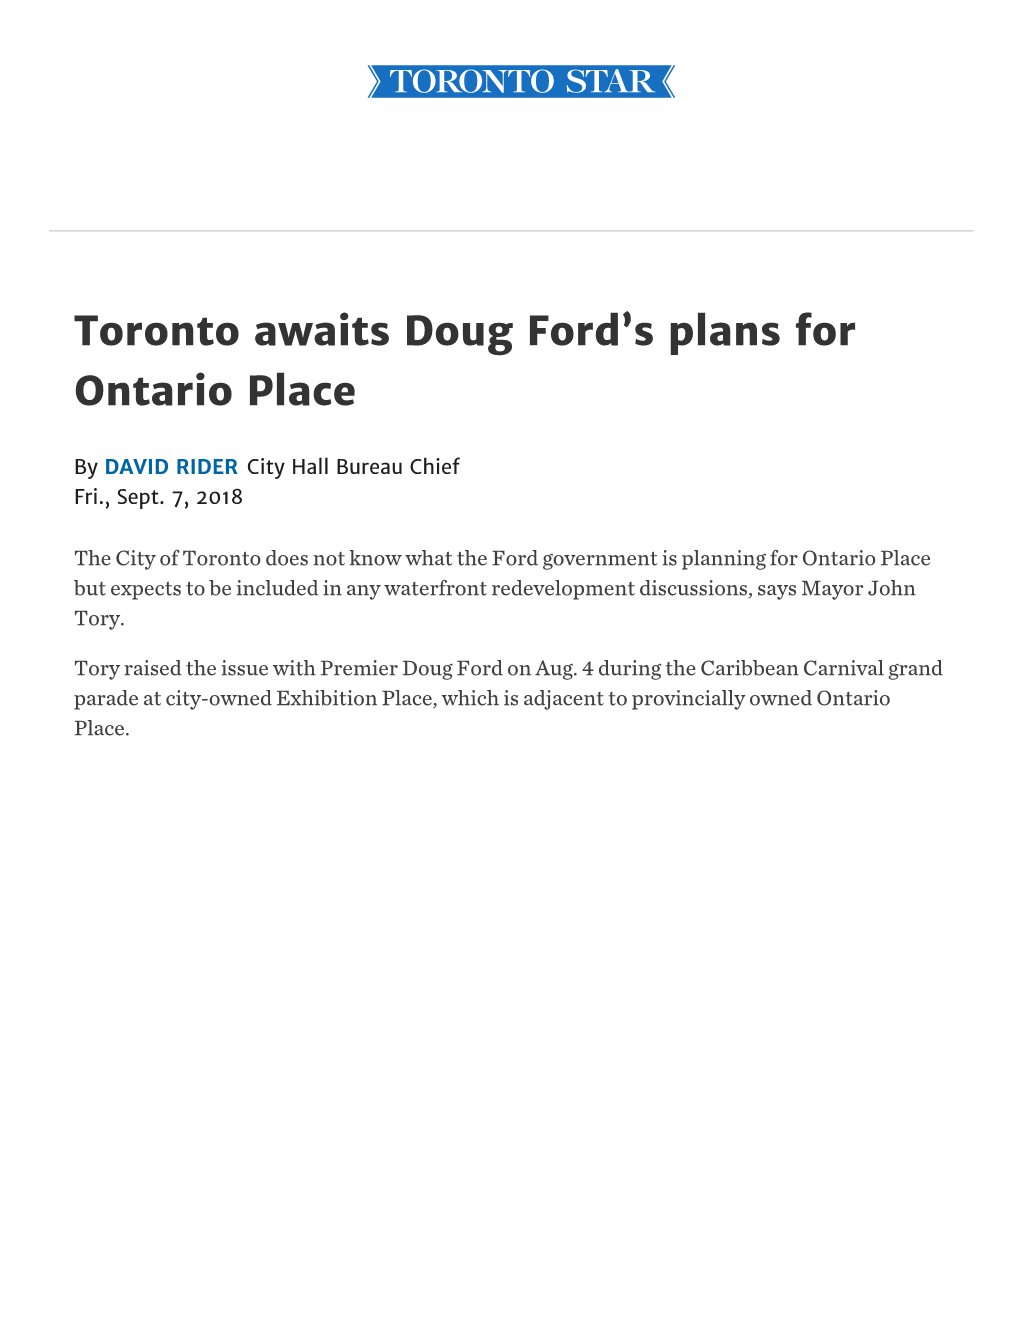 Toronto Awaits Doug Ford's Plans for Ontario Place